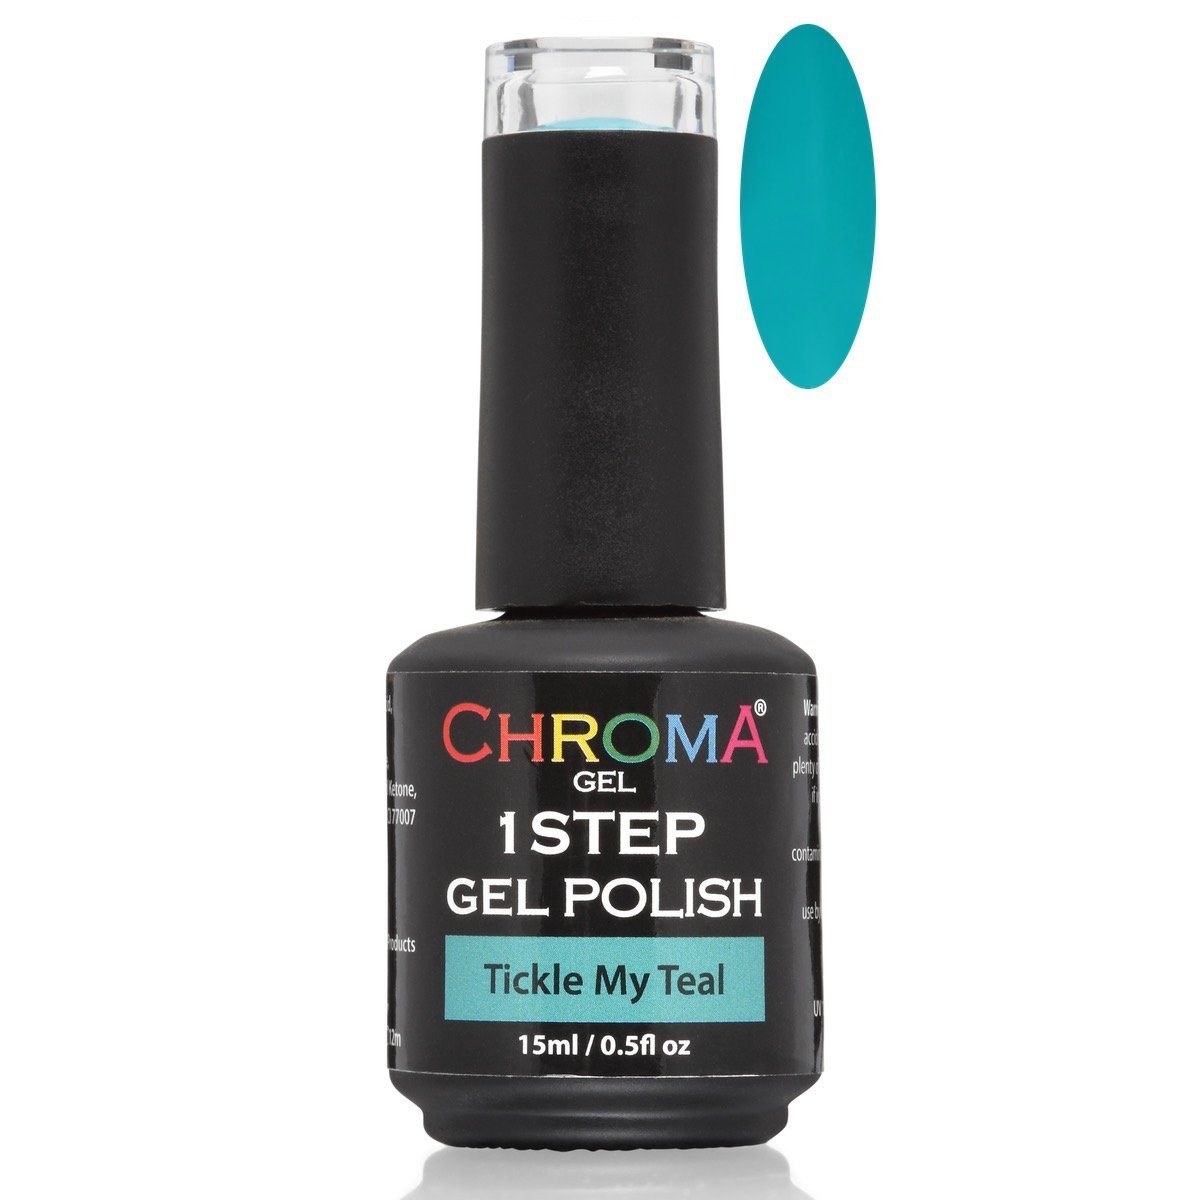 Chroma Gel 1 Step Gel Polish Tickle My Teal No.61 - Beauty Hair Products LtdChroma Gel